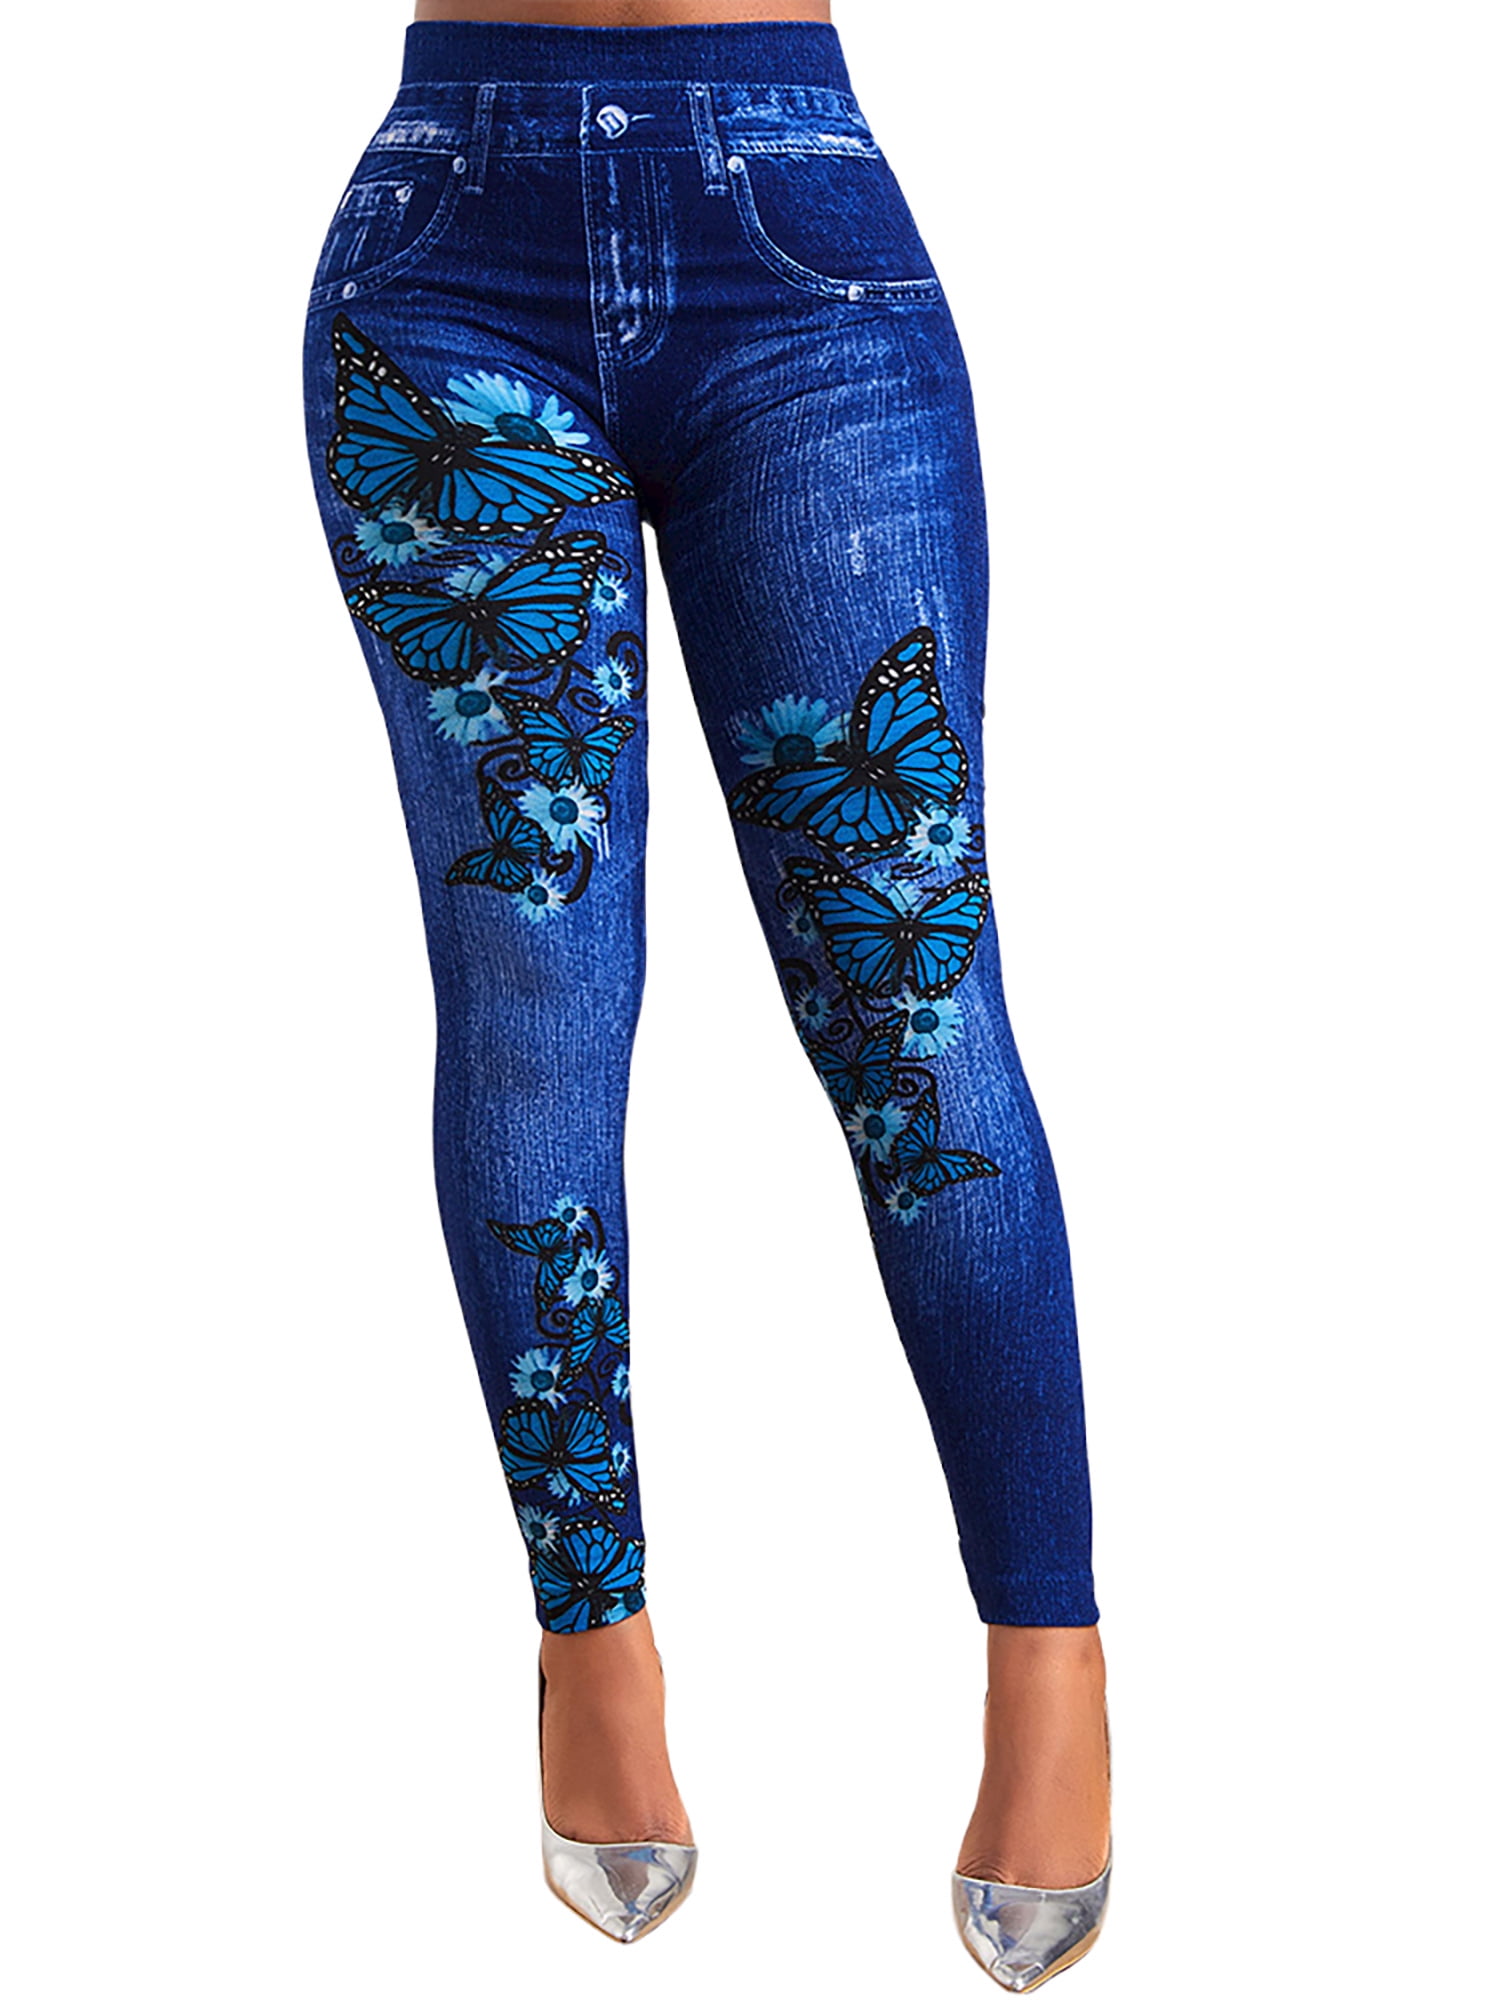 Blue Butterfly Print Faux Denim Jeans Leggings For Women Slim